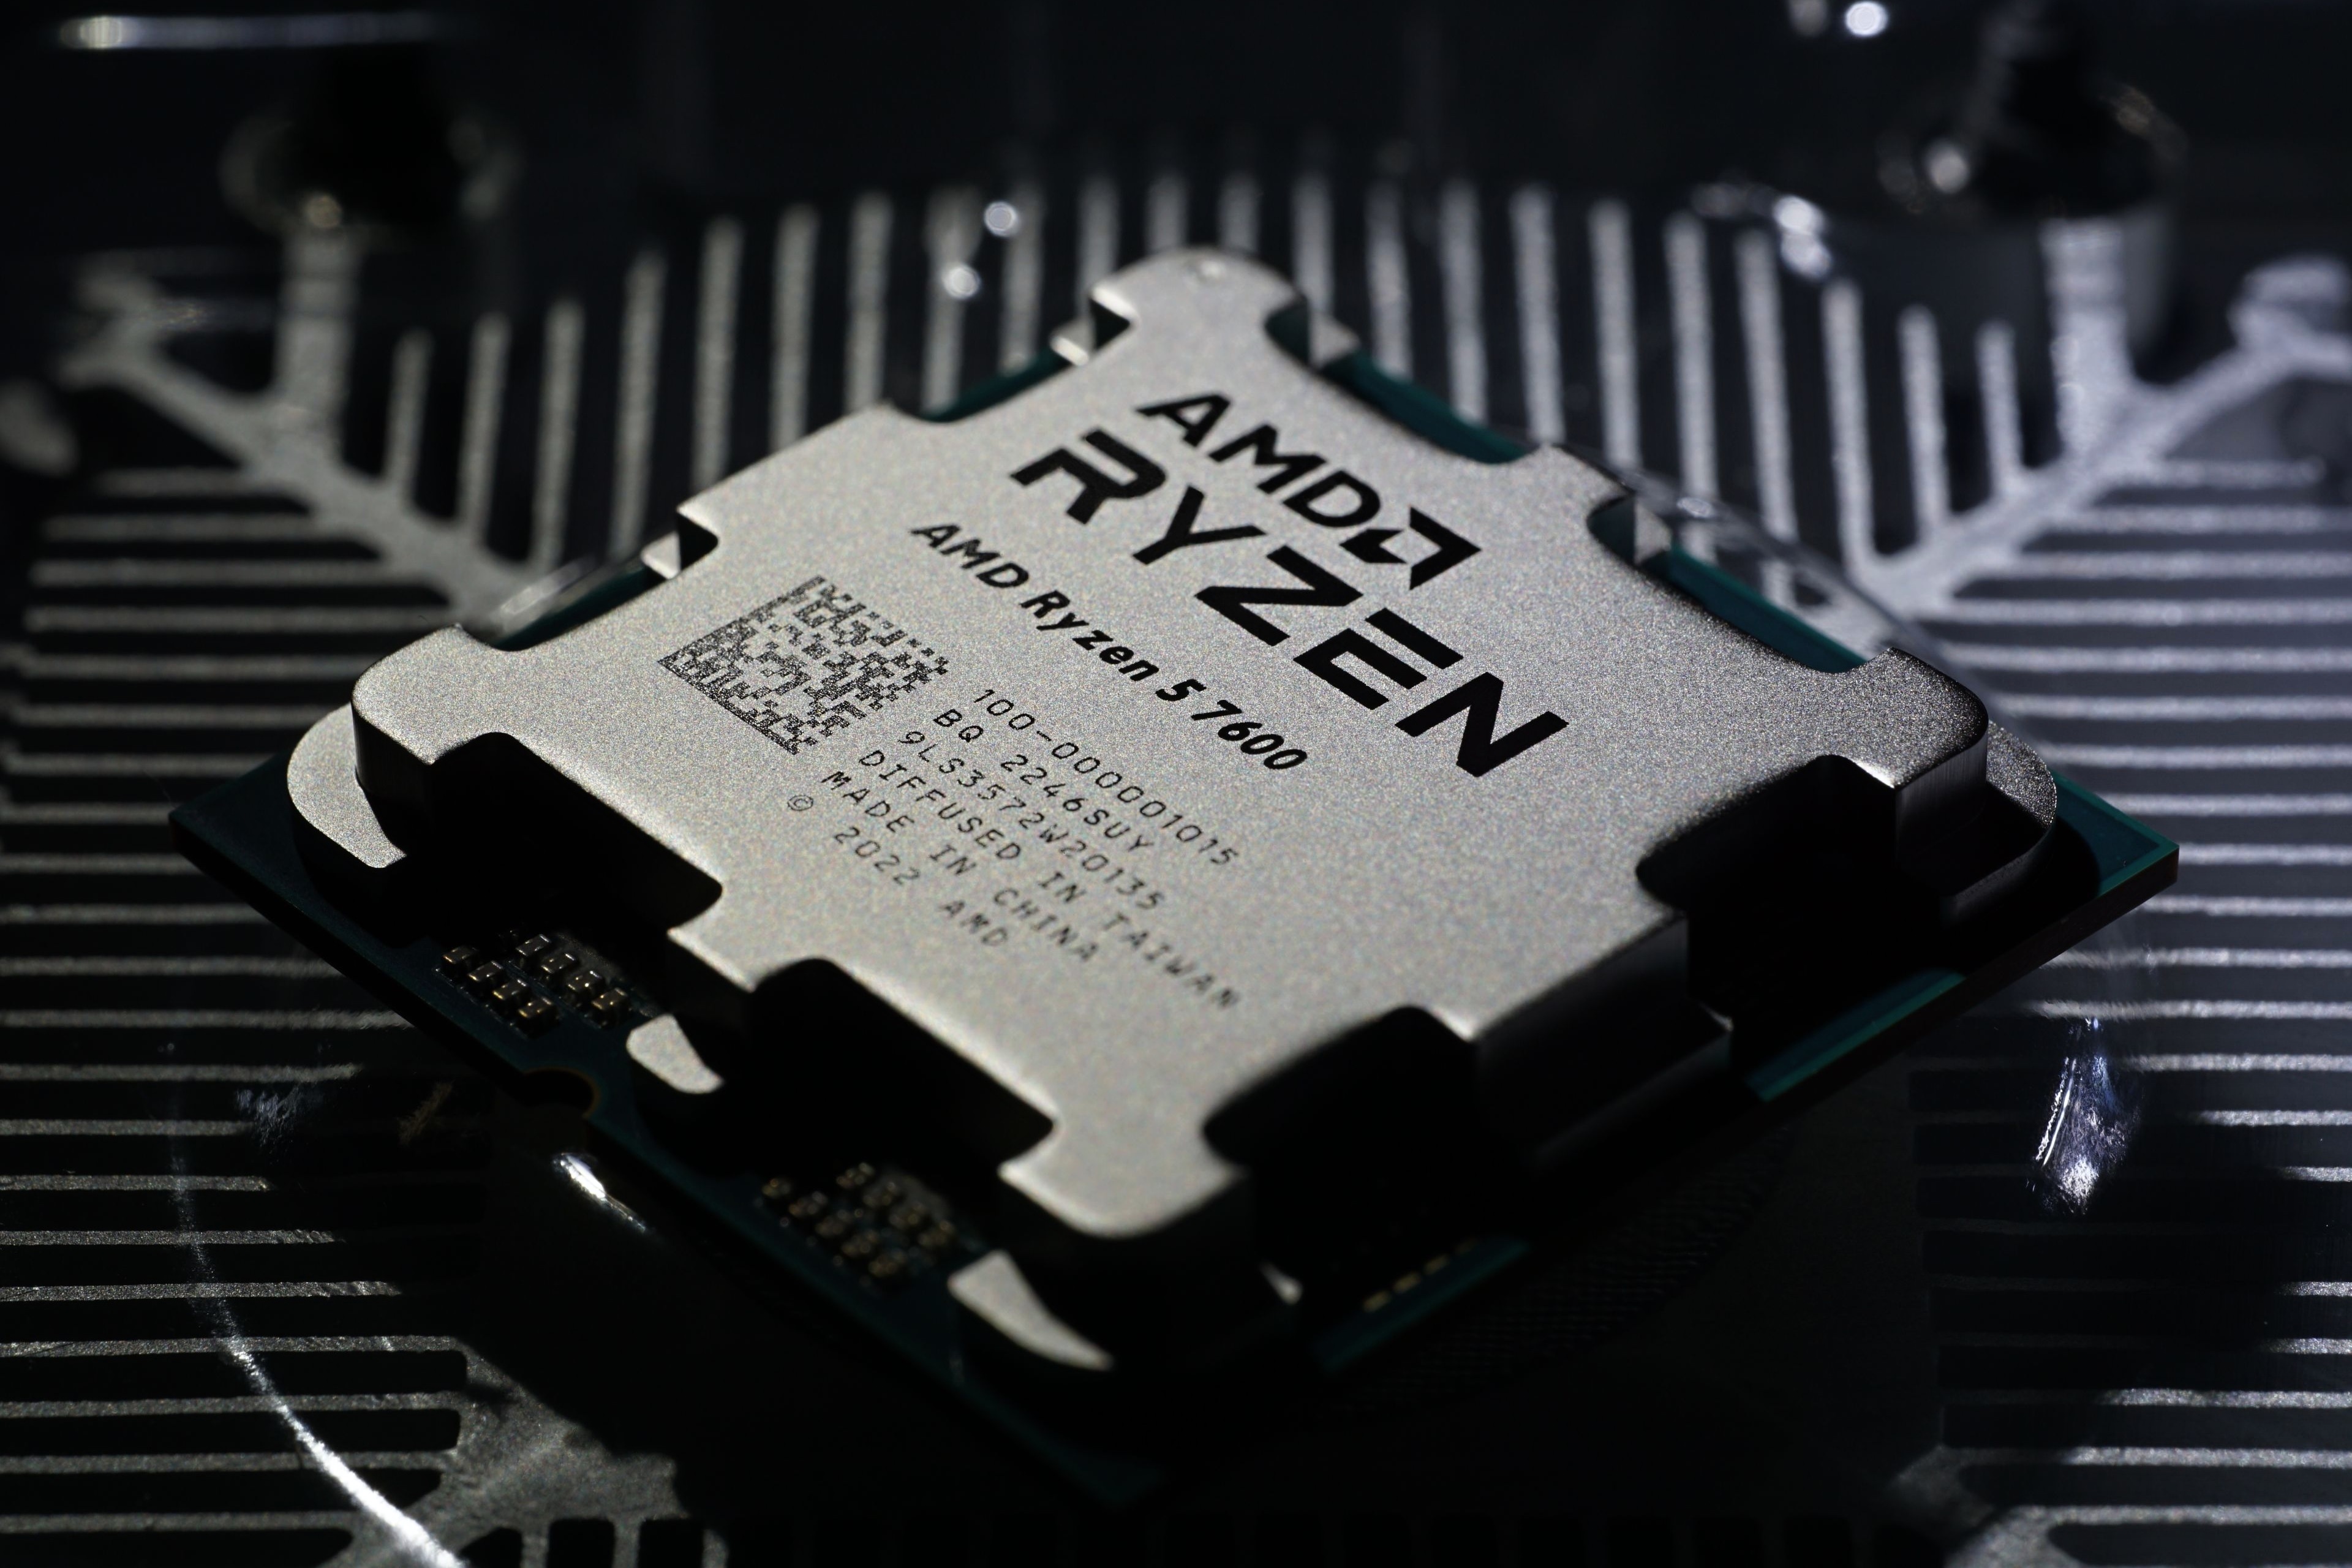 AMD Ryzen 5 7600 vs Ryzen 5 7600X CPU Review - Page 7 of 8